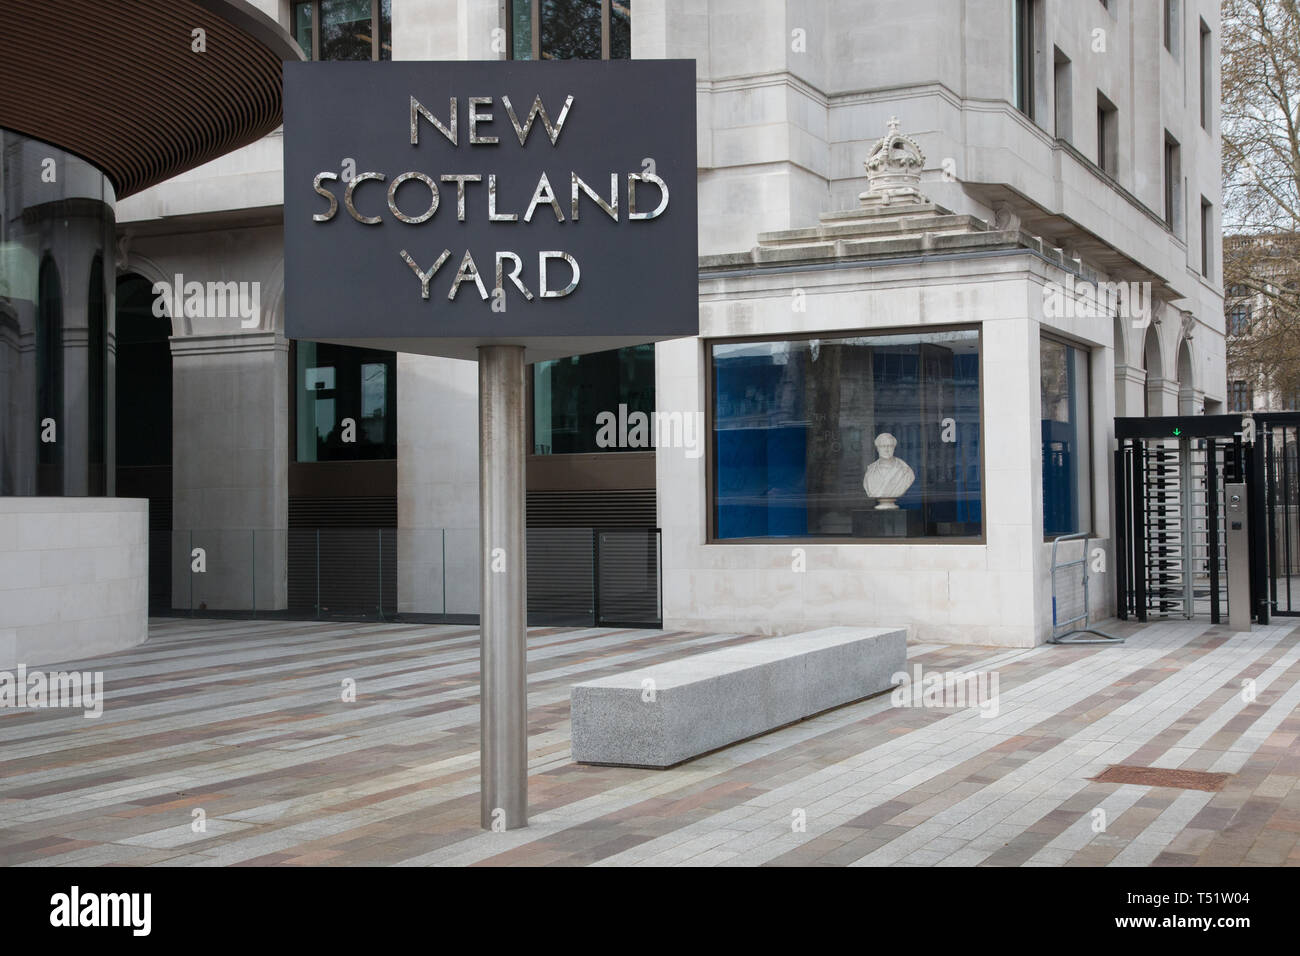 New Scotland Yard sign Foto de stock